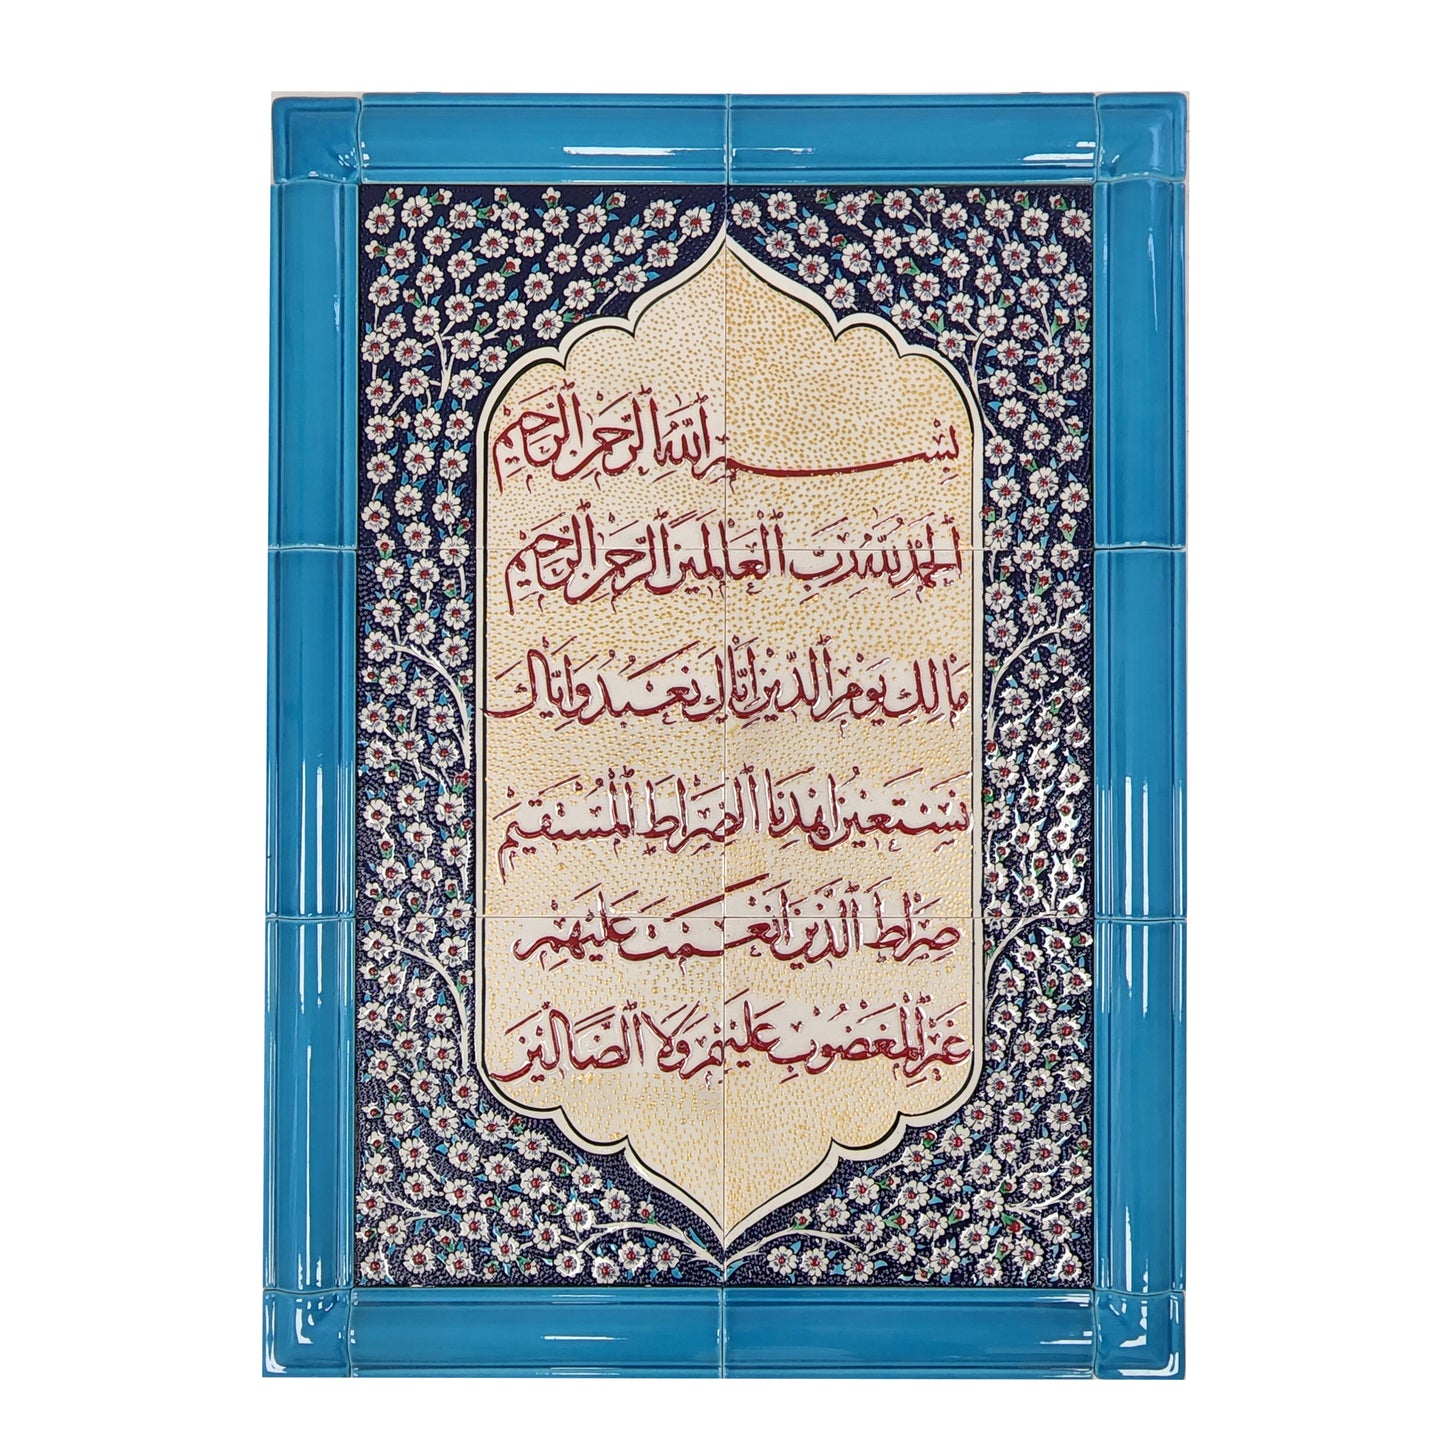 Al-Fatiha - Islamic Art Calligraphy Ceramic Tile